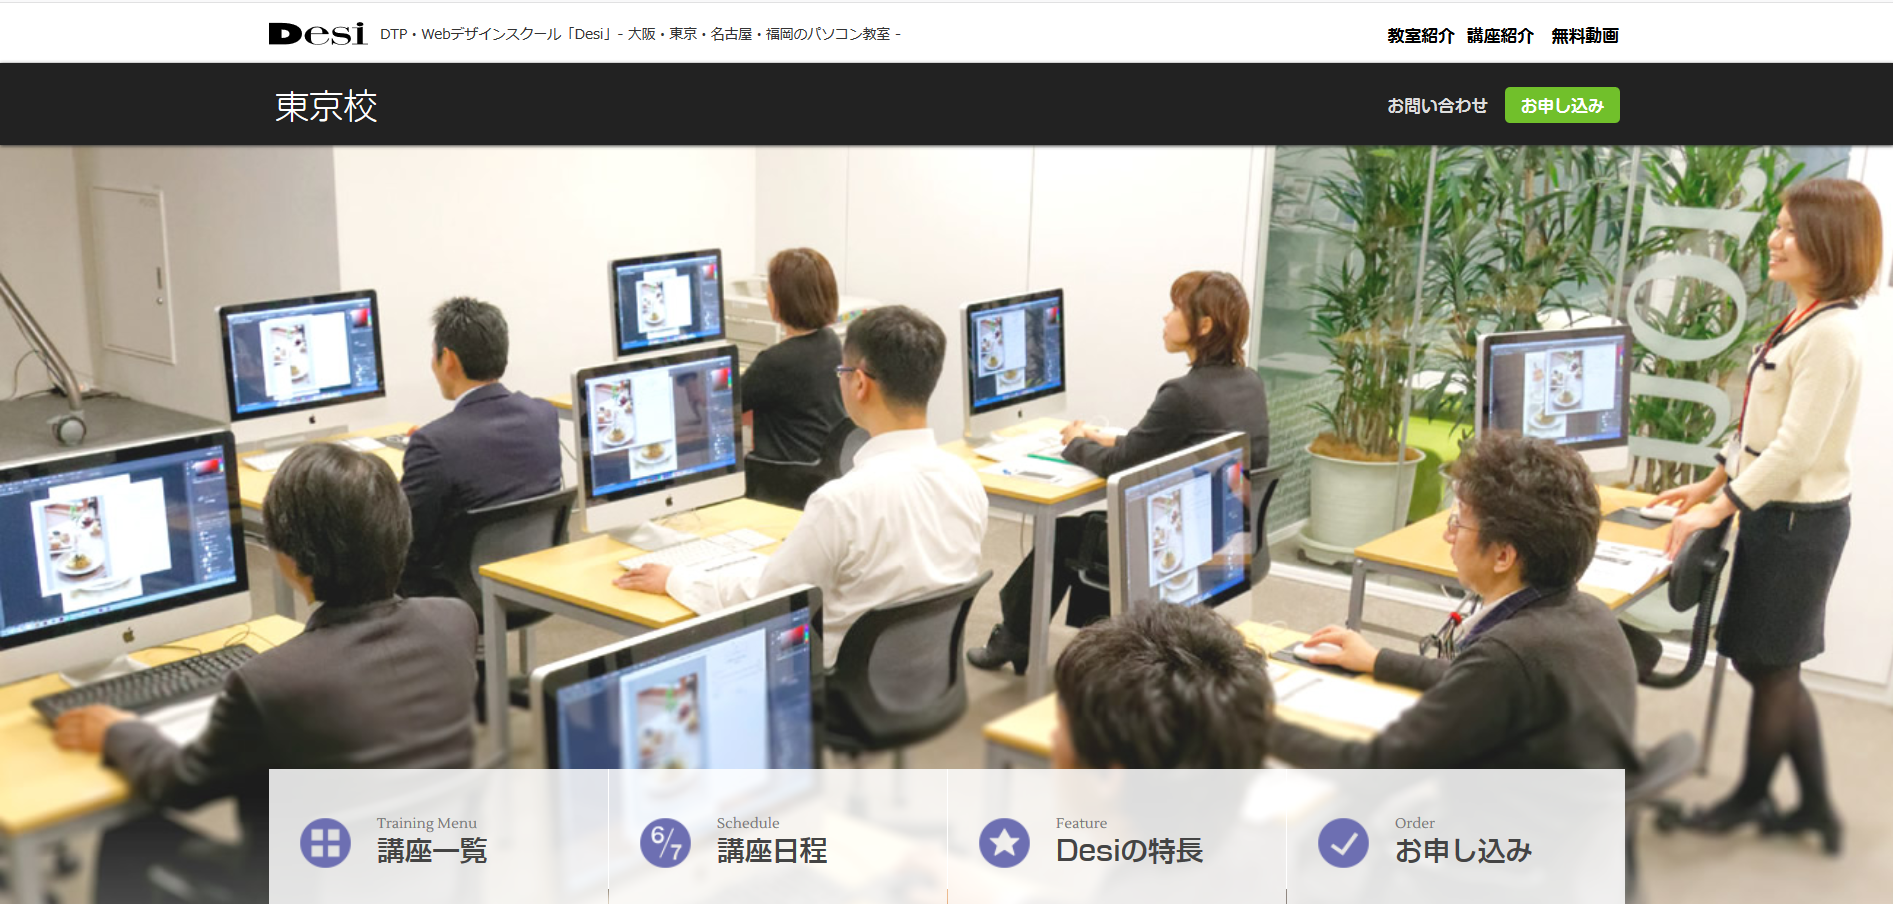 DTP・Webデザイン教室 Desi 東京校の評判・口コミ